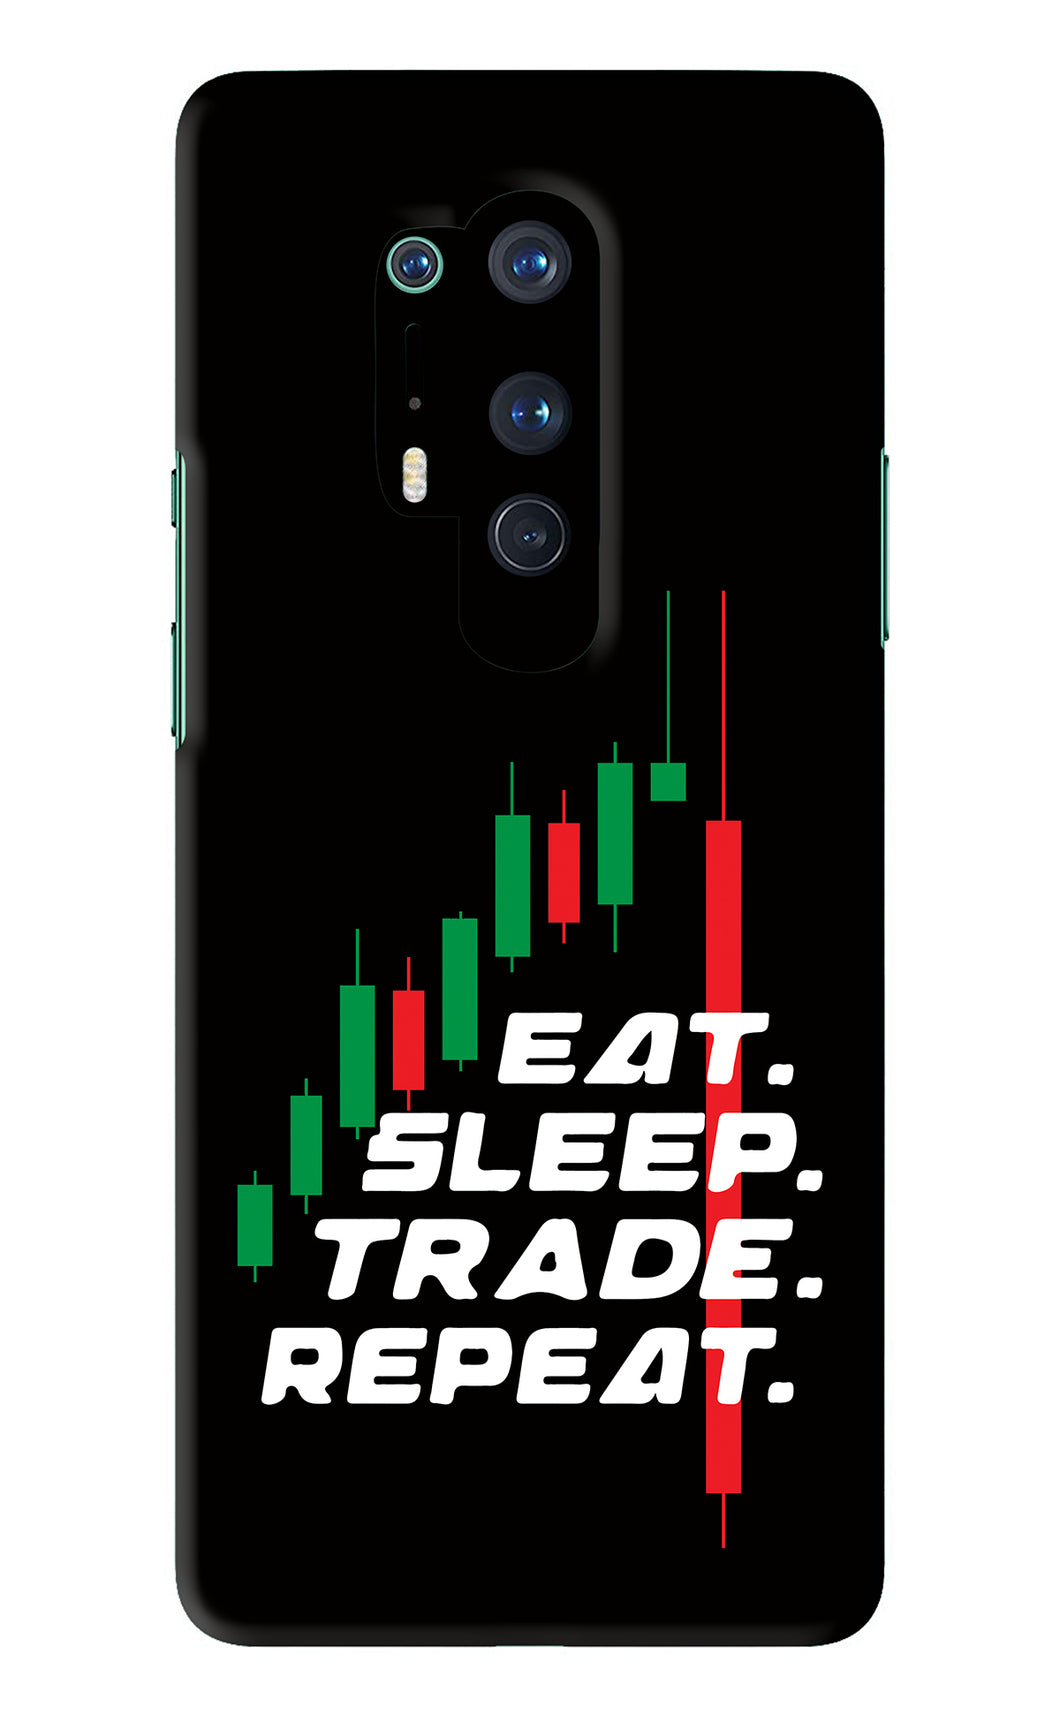 Eat Sleep Trade Repeat OnePlus 8 Pro Back Skin Wrap